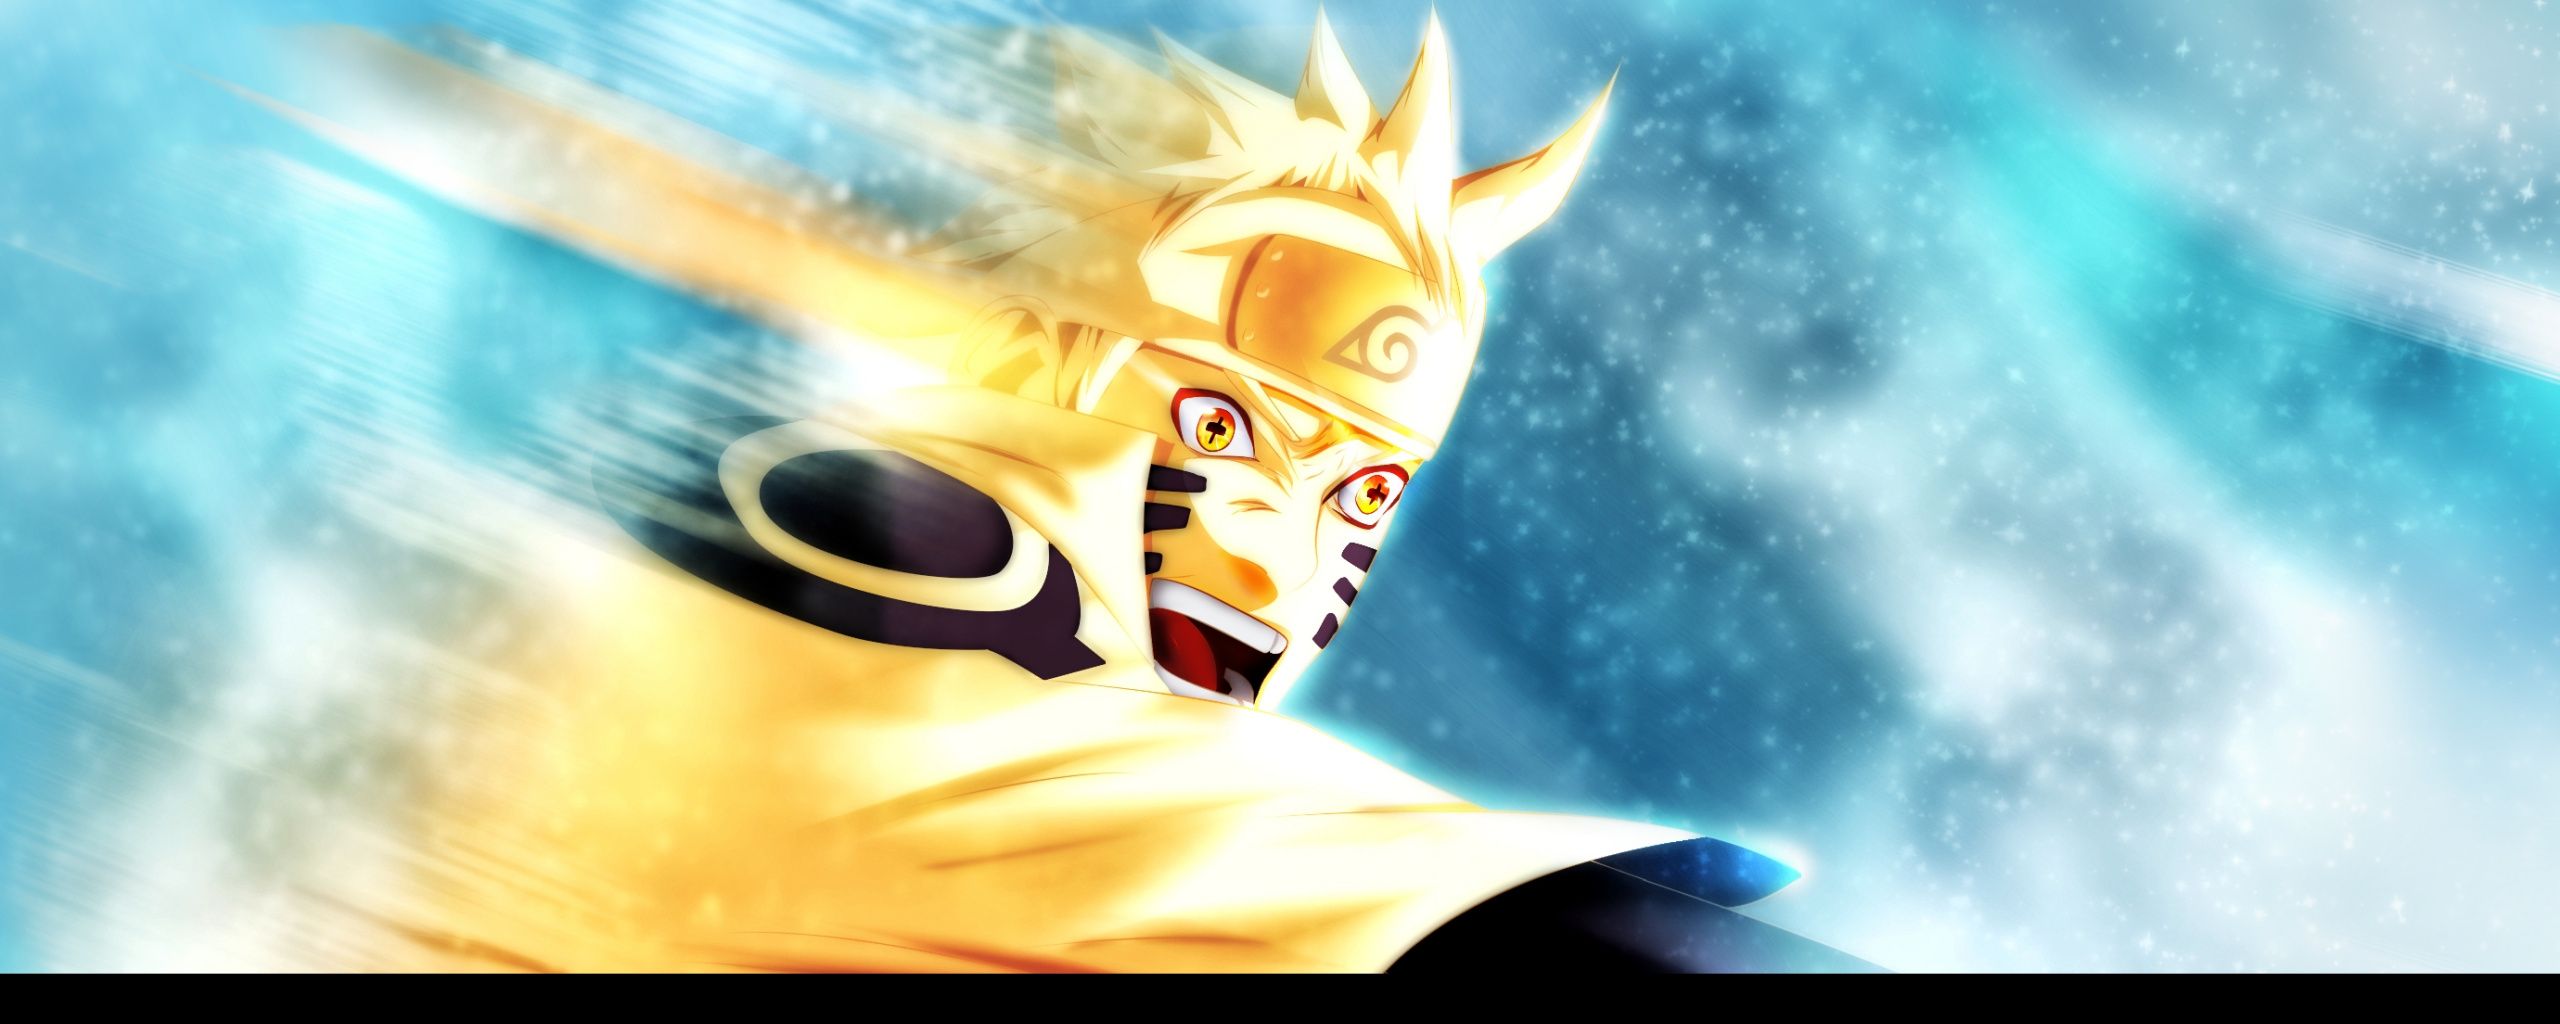 Download Naruto Uzumaki, anime boy, angry, art wallpaper, 2560x Dual Wide, Wide 21: Widescreen